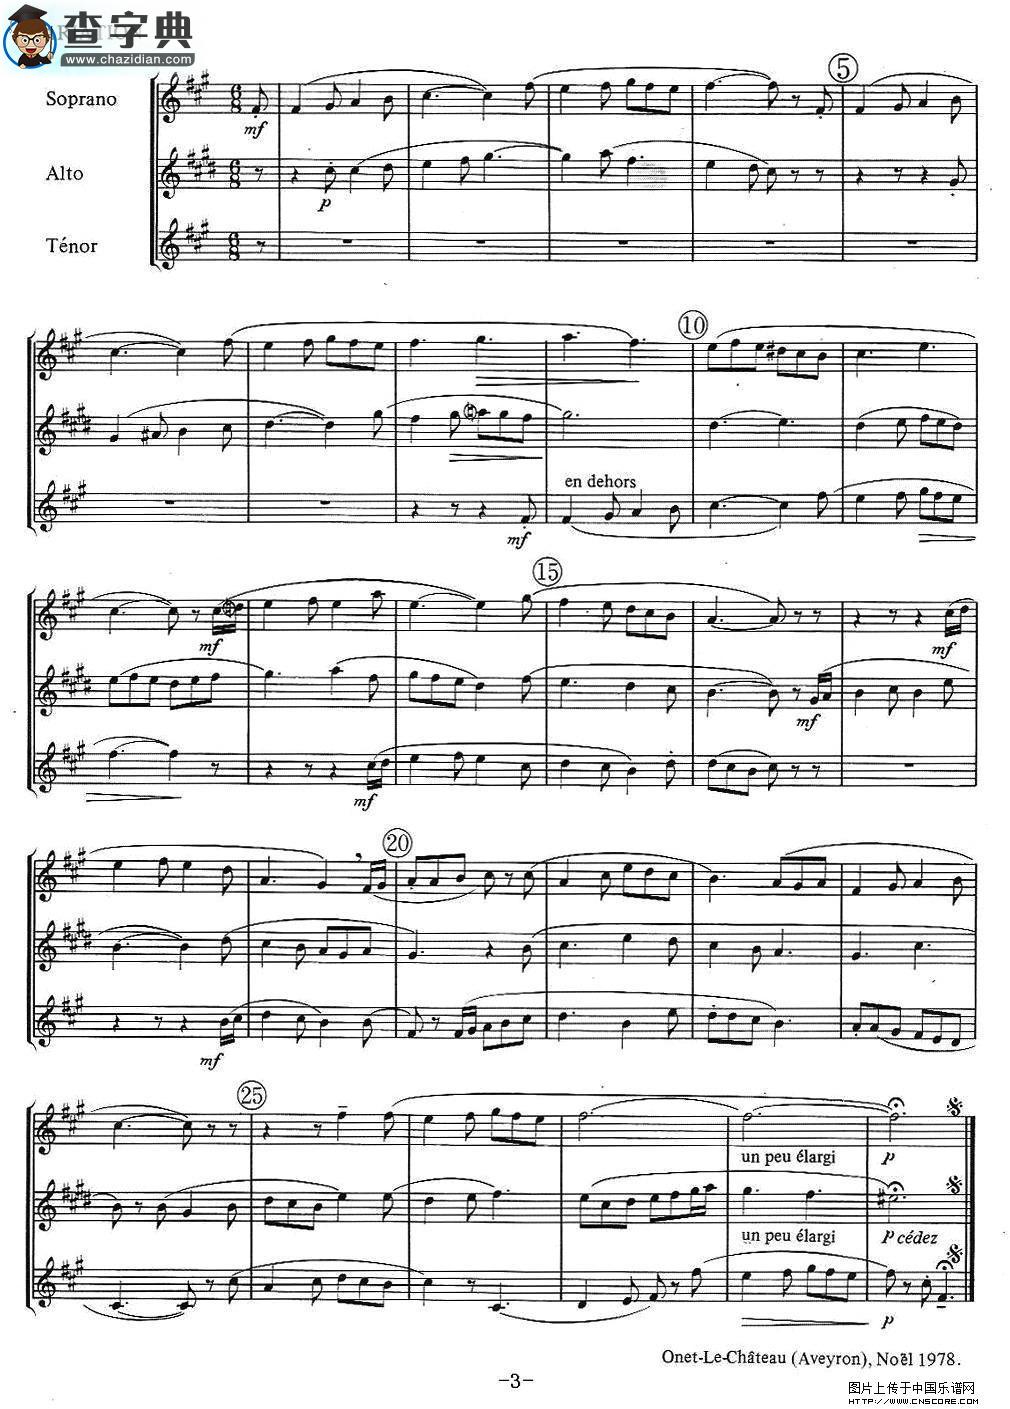 jean Bouvard 编写的6首萨克斯四重奏之一萨克斯谱